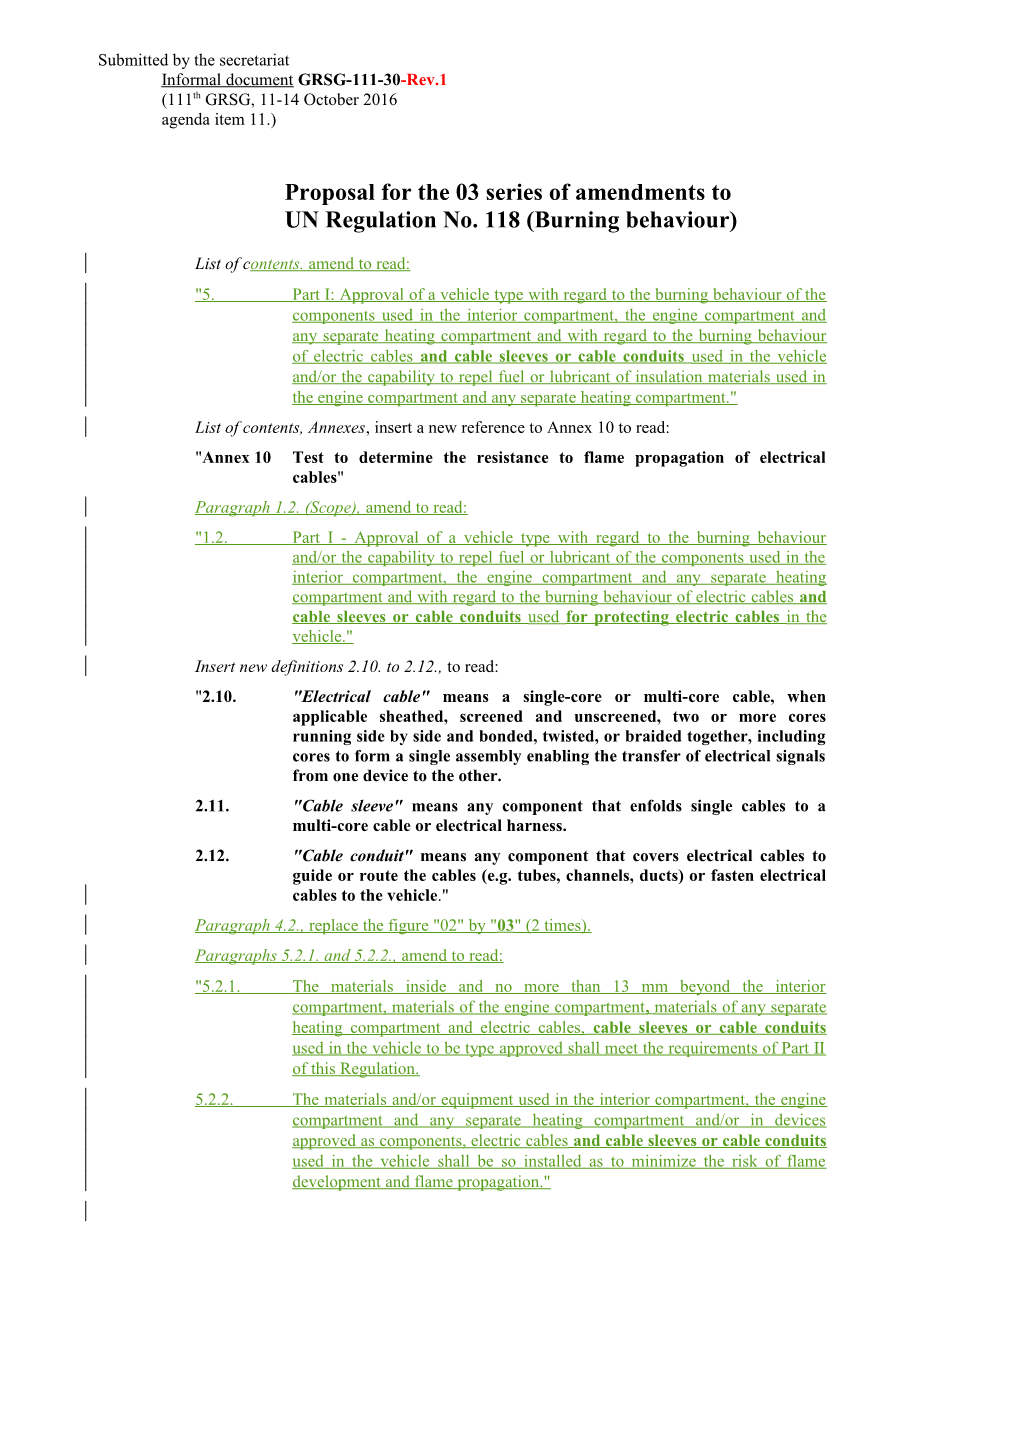 Proposal for the 03 Series of Amendments to UN Regulation No. 118 (Burning Behaviour)